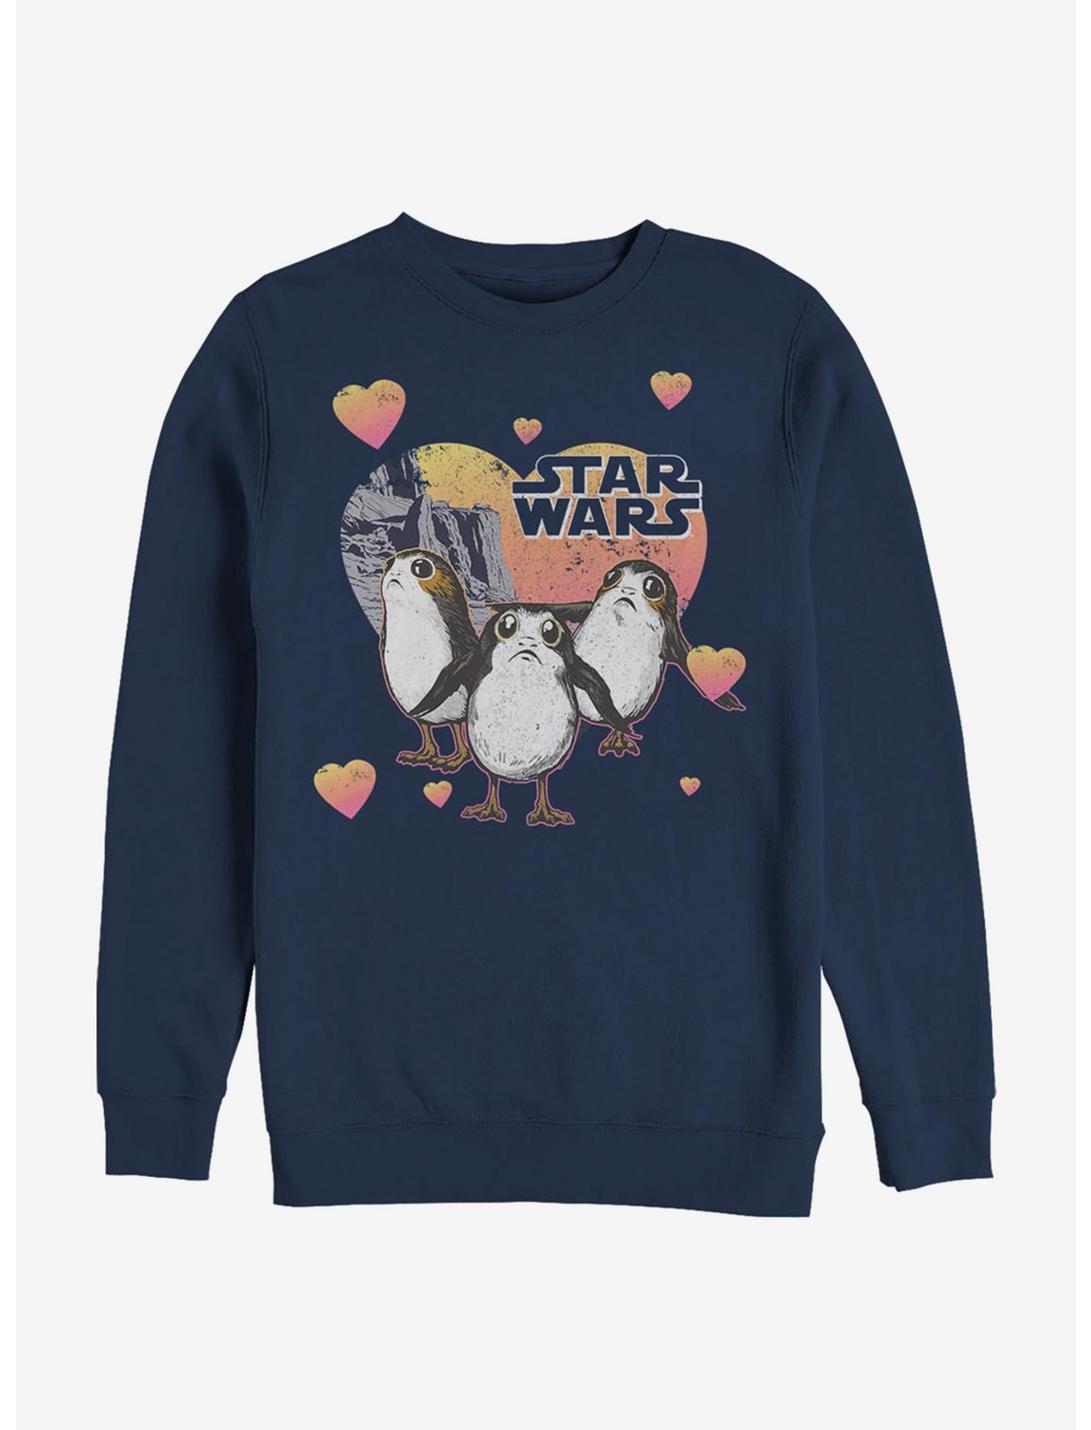 Star Wars Porg Hearts Sweatshirt, NAVY, hi-res